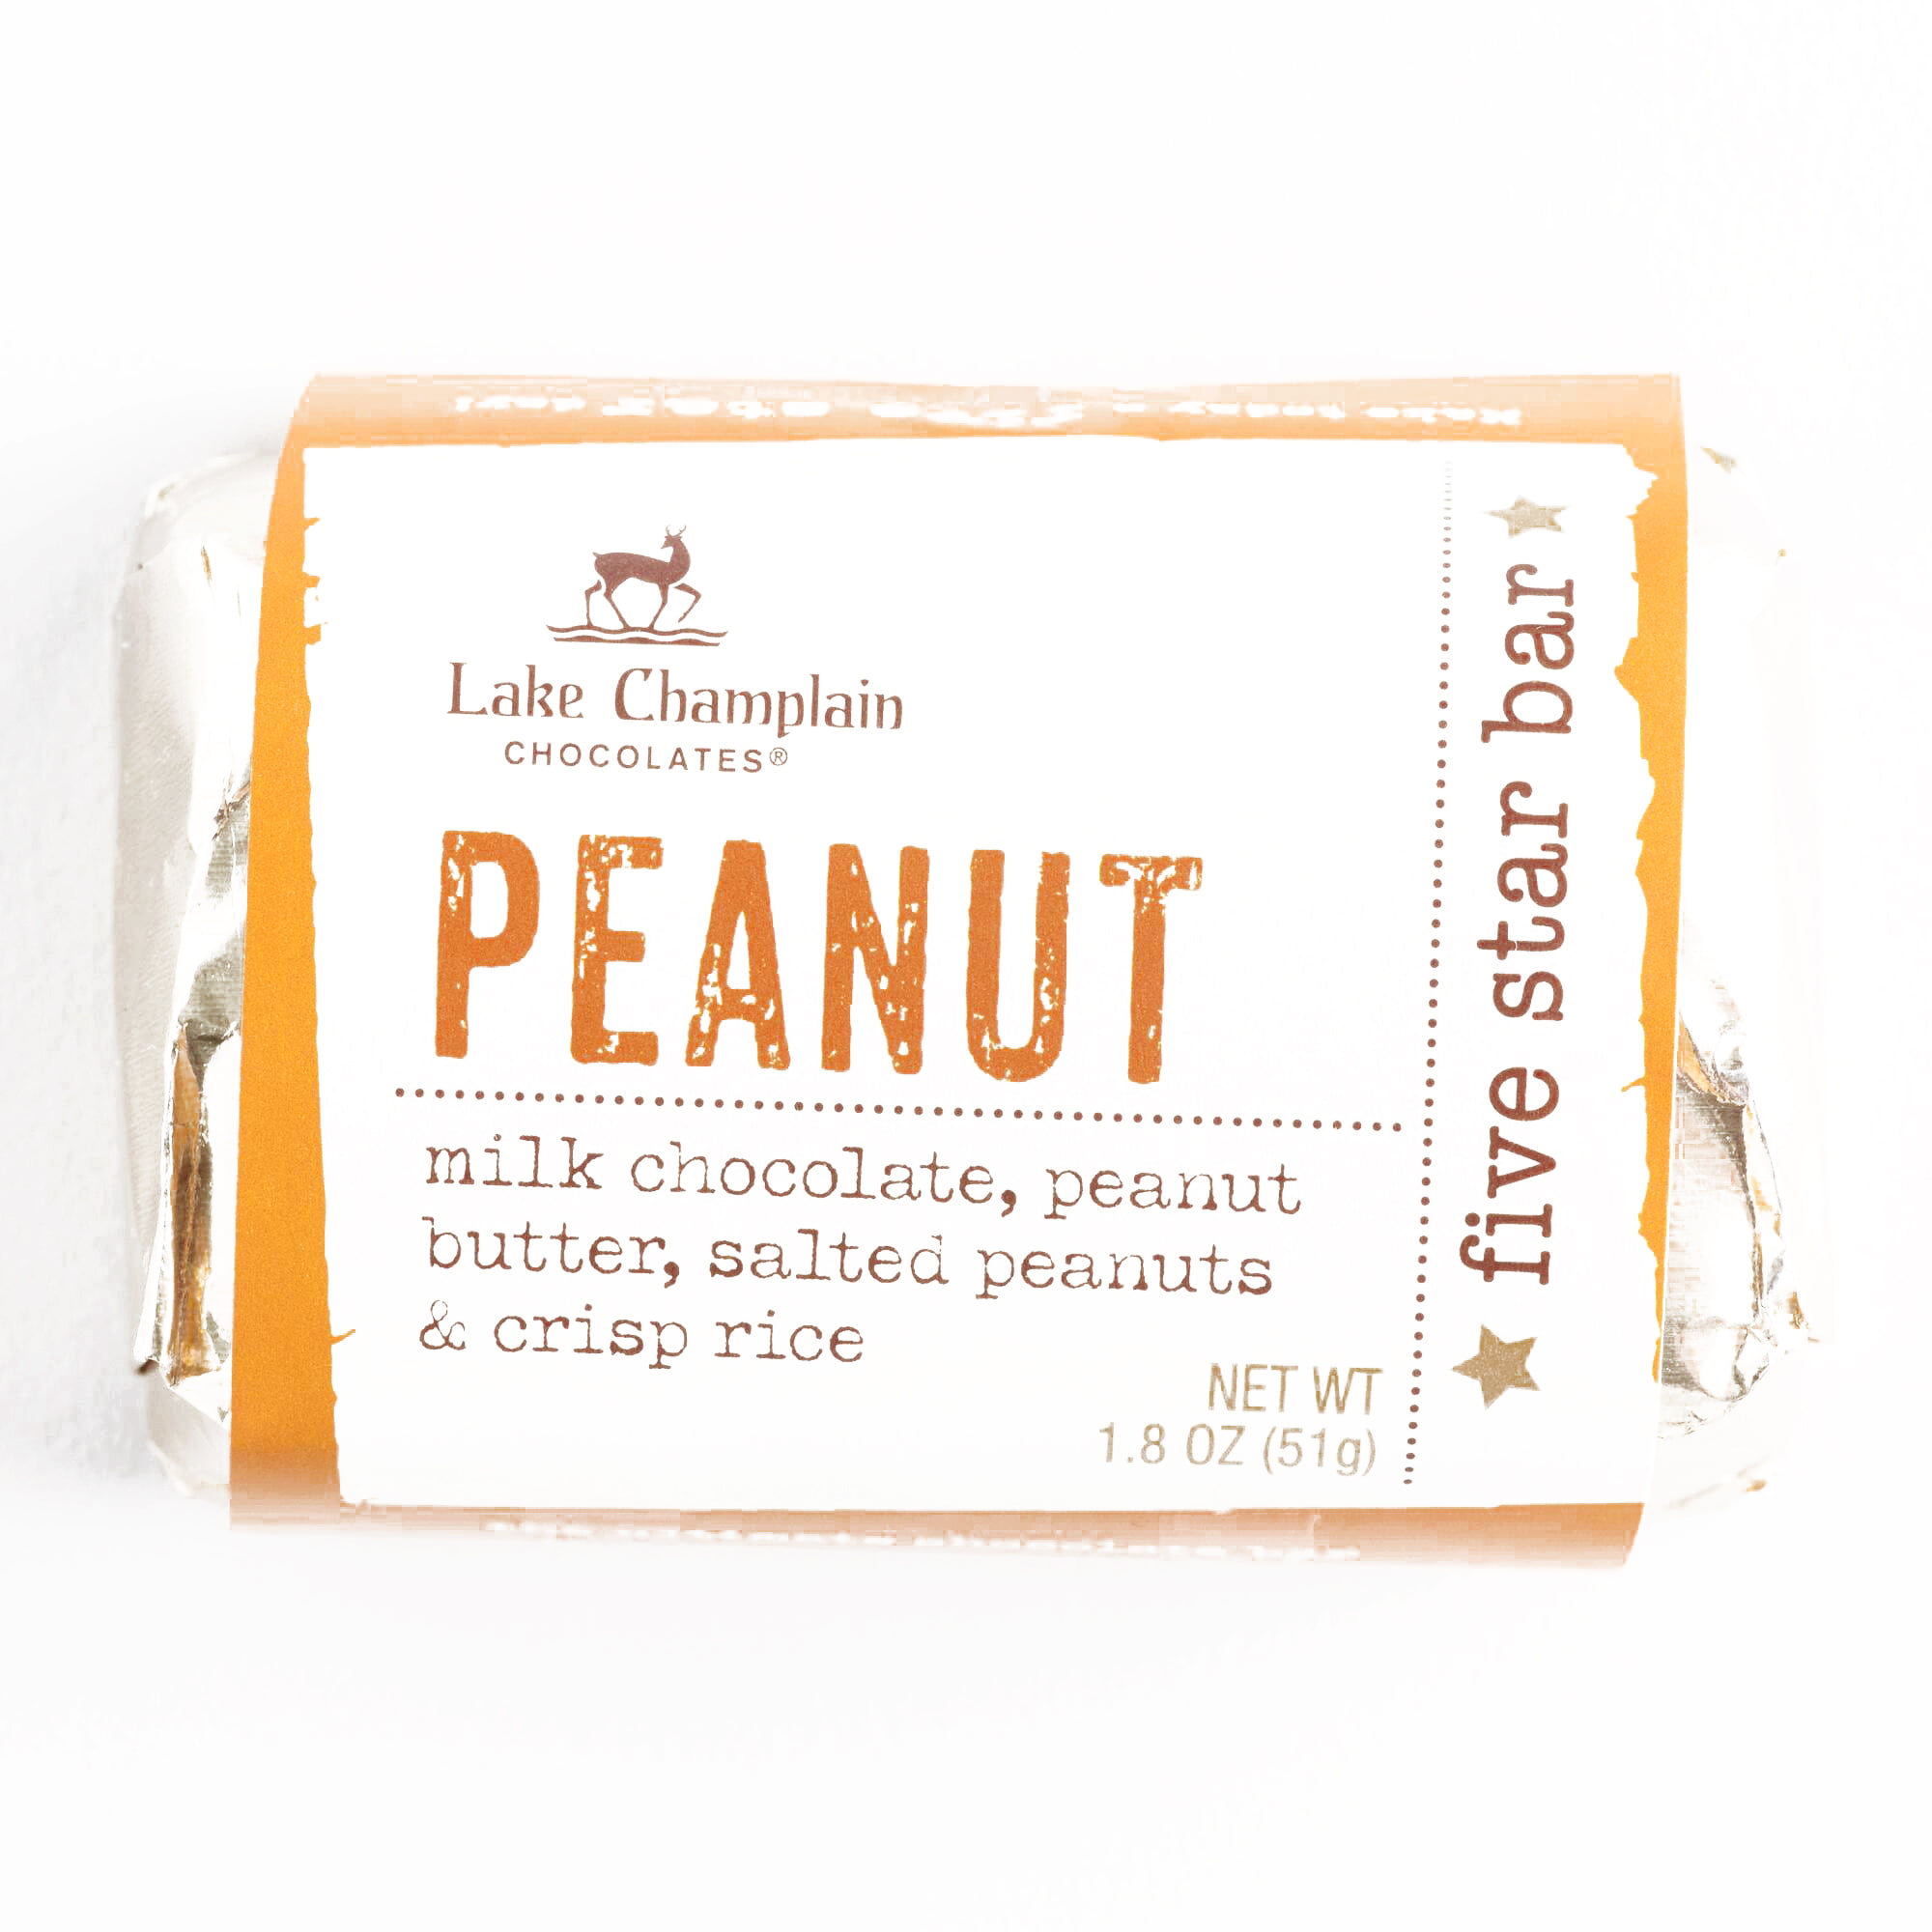 Lake Champlain Peanut Butter Five Star Chocolate Candy Bar, 1.8 Ounces (10 Pack)